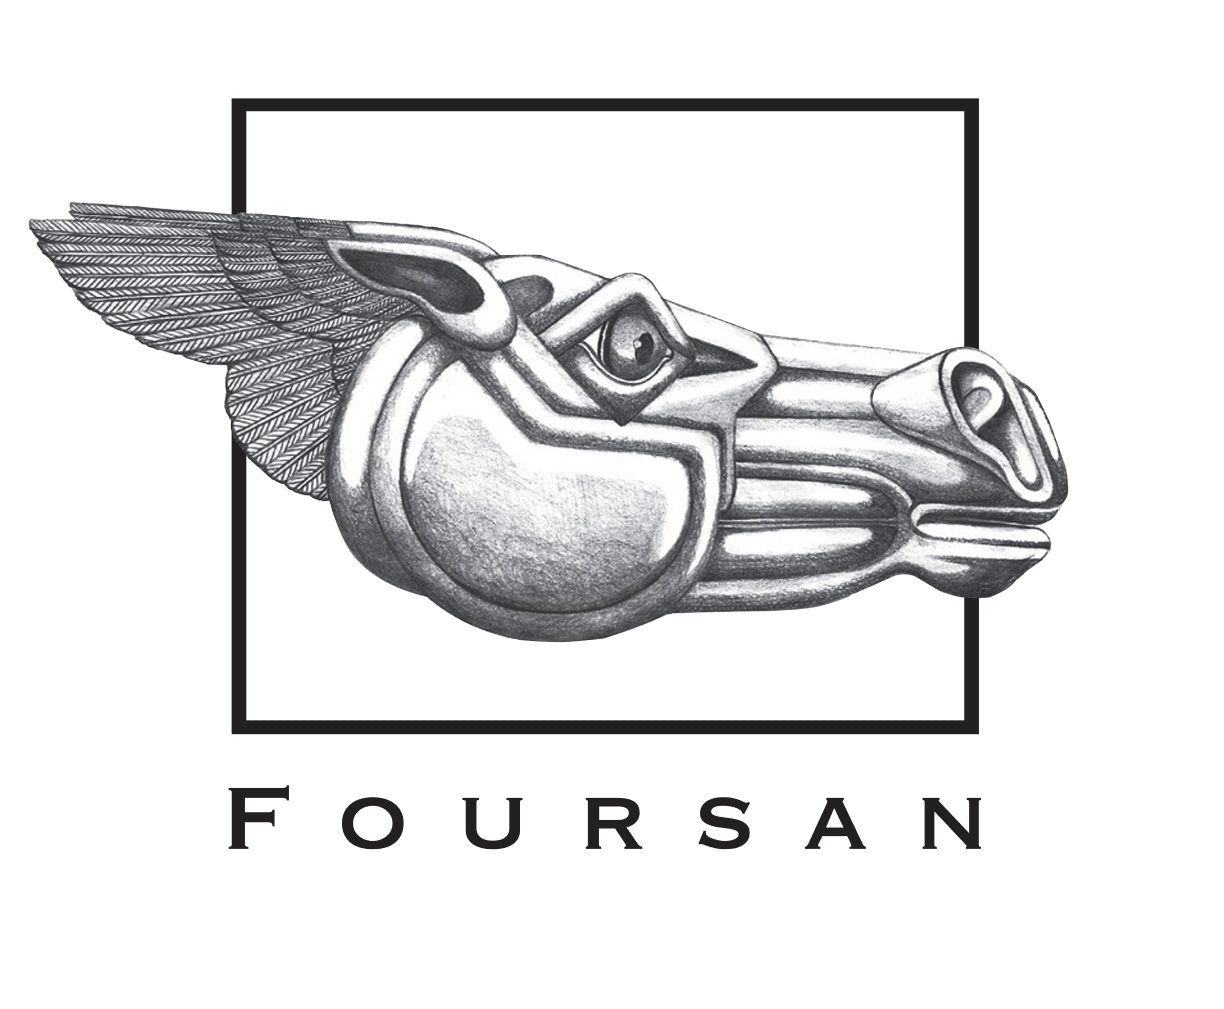 4san logo